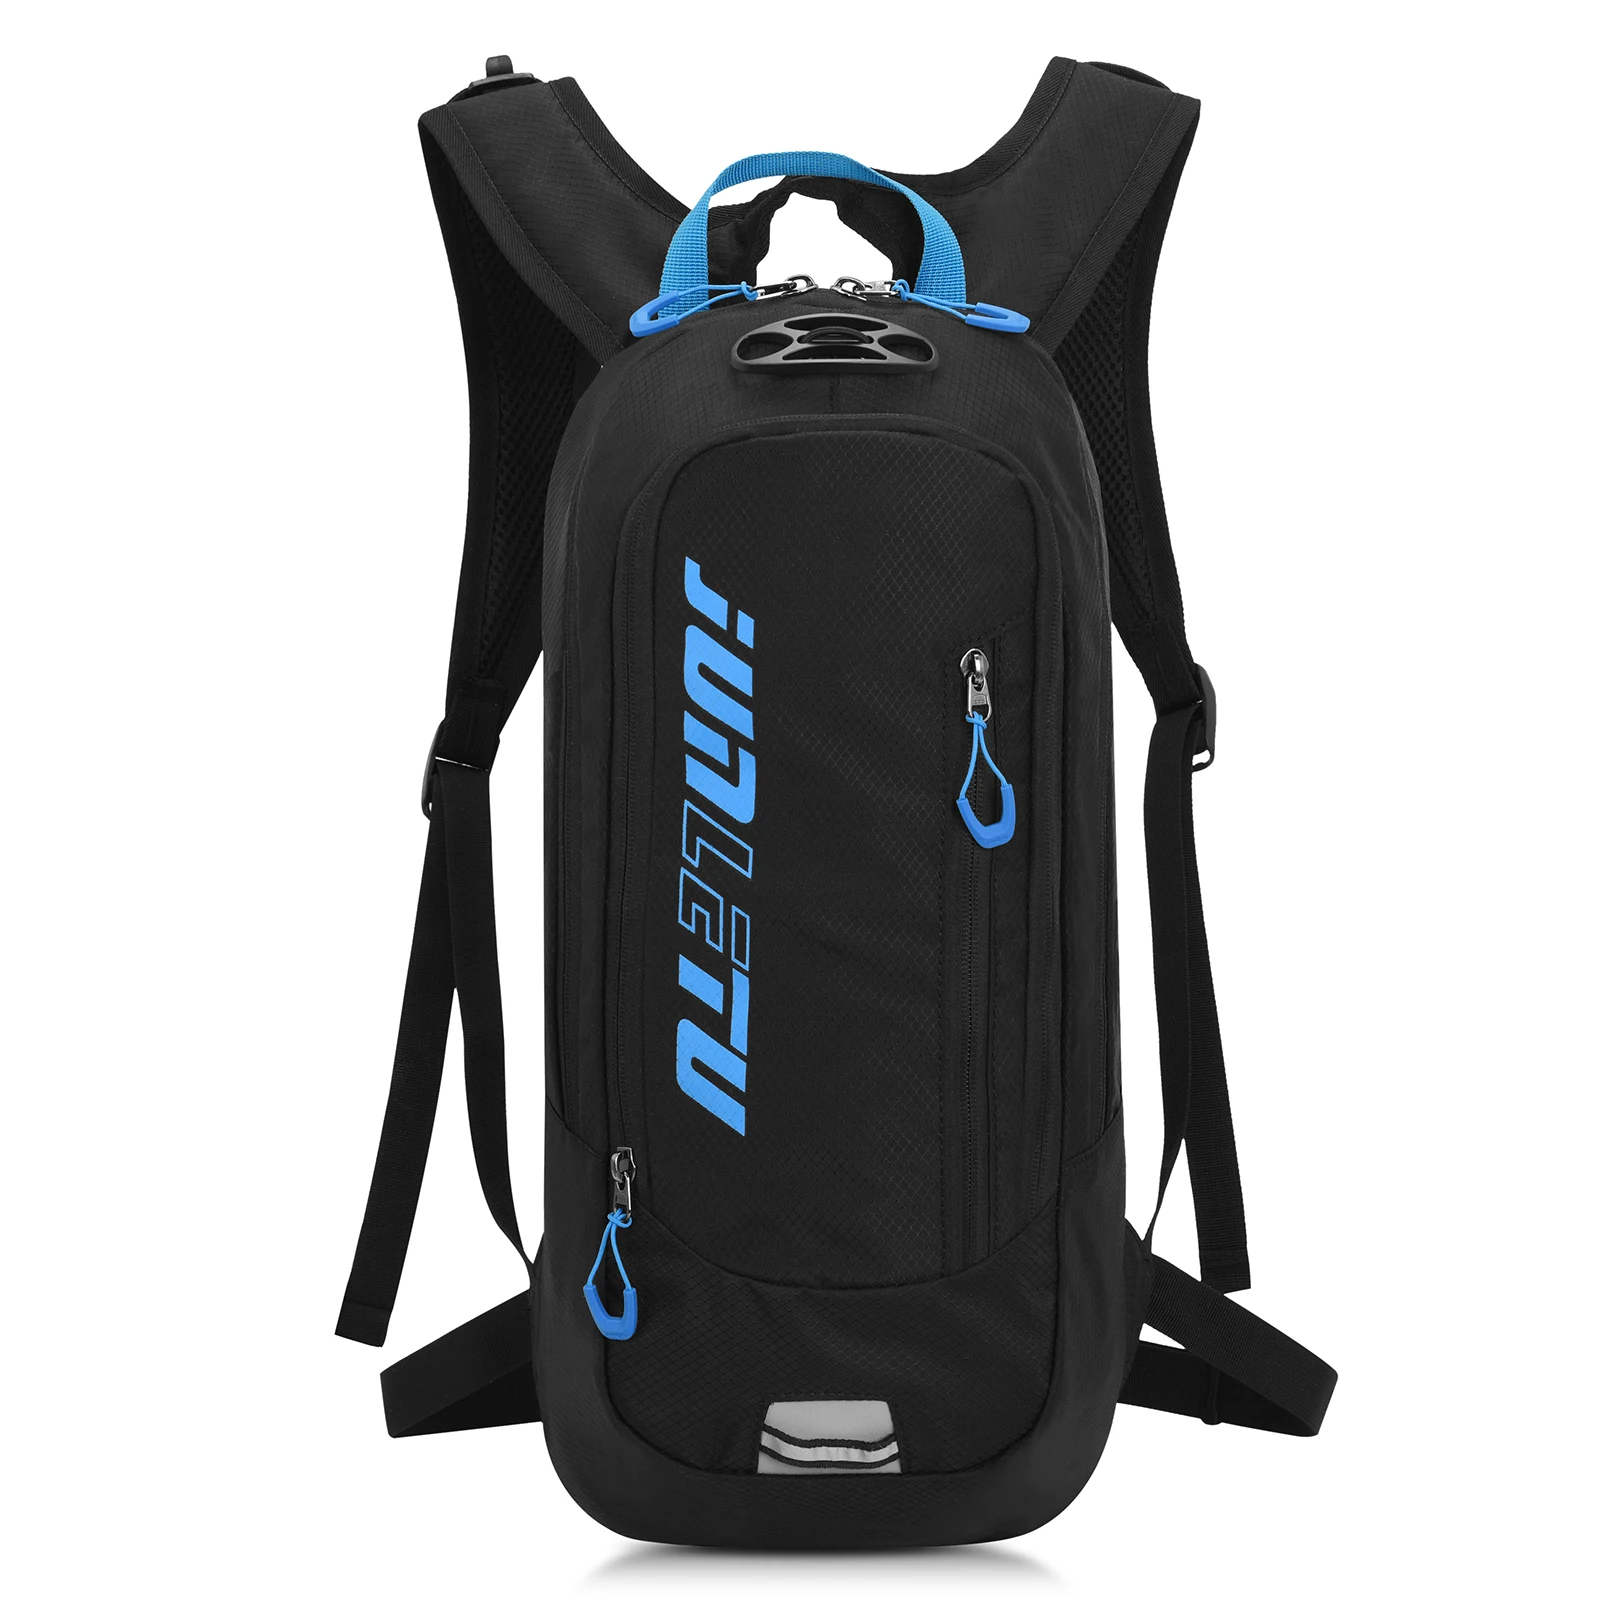 Outdoor Sports Climbing Backpack Waterproof Bike Riding Travel Daypack Schoolbag 